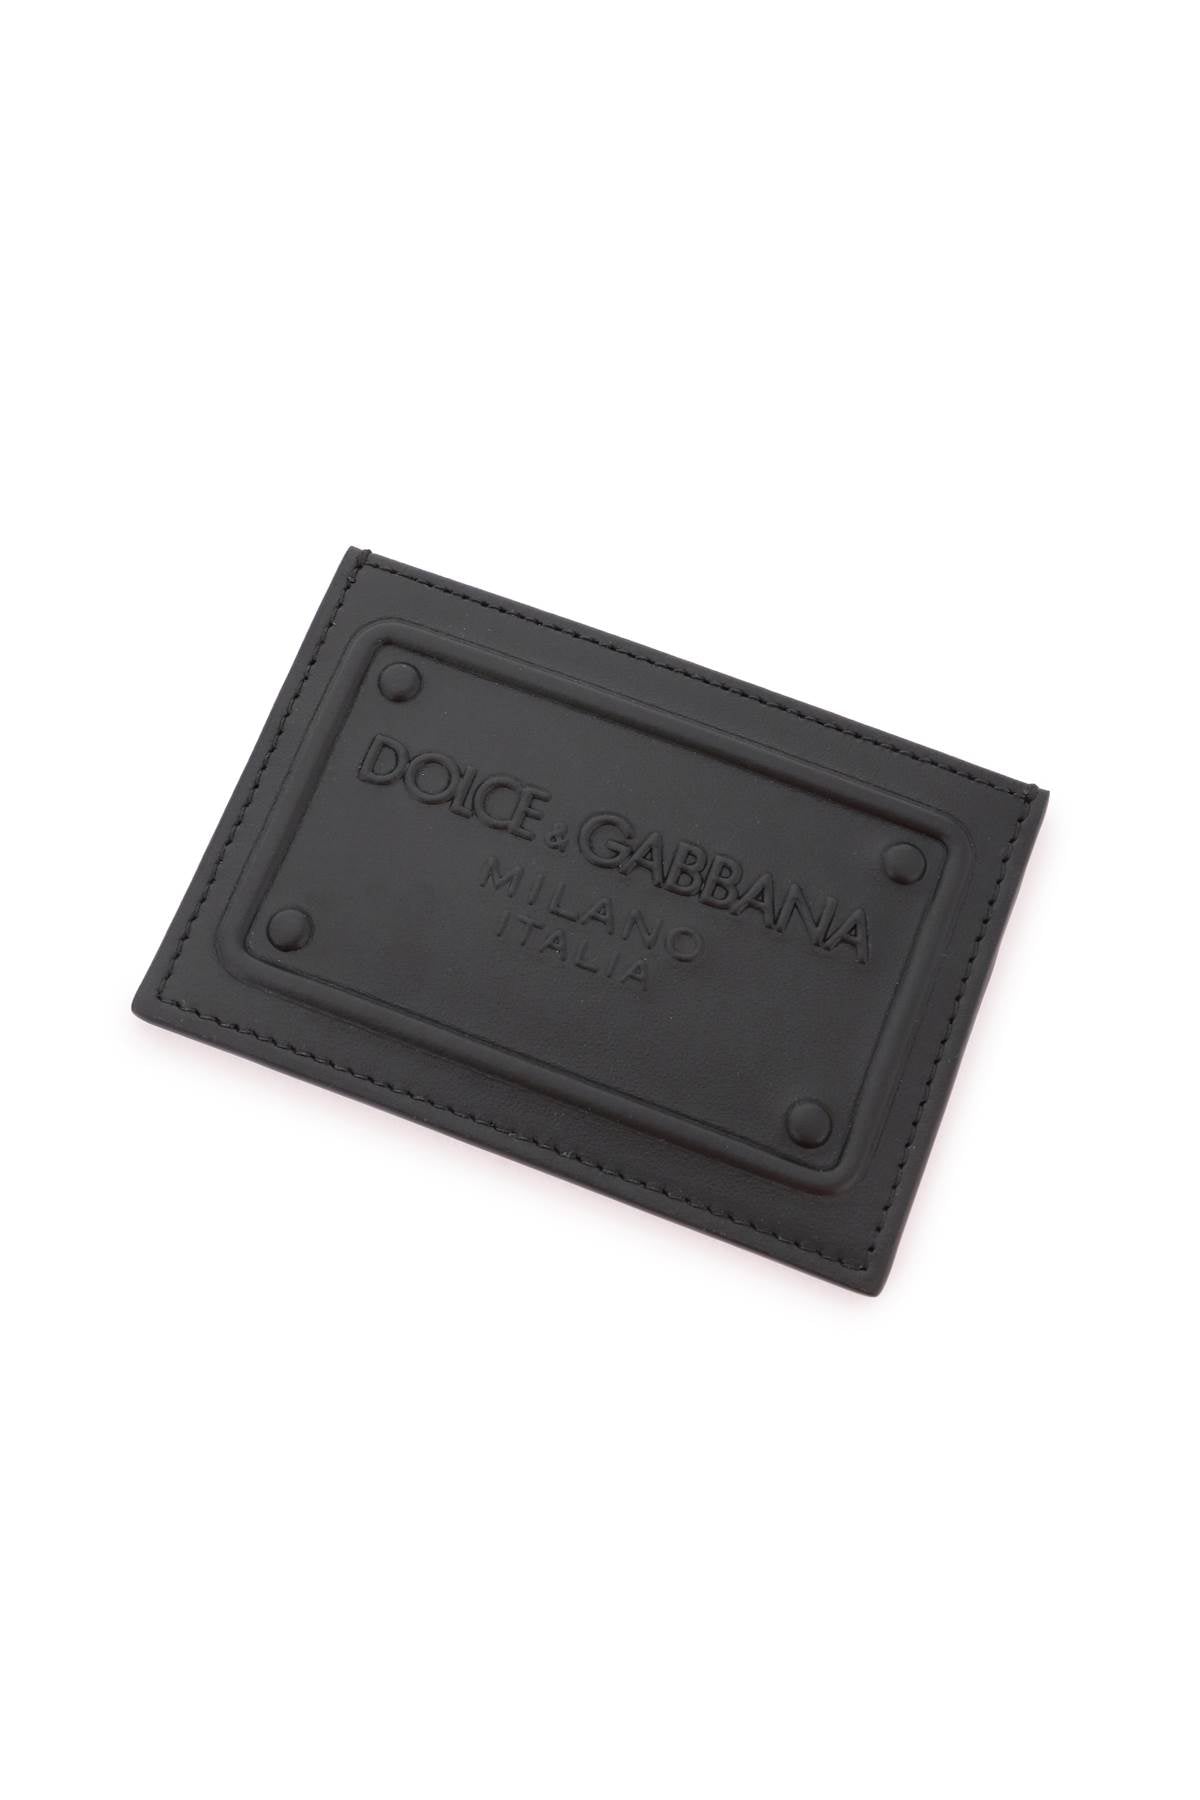 Dolce & gabbana embossed logo leather cardholder-1